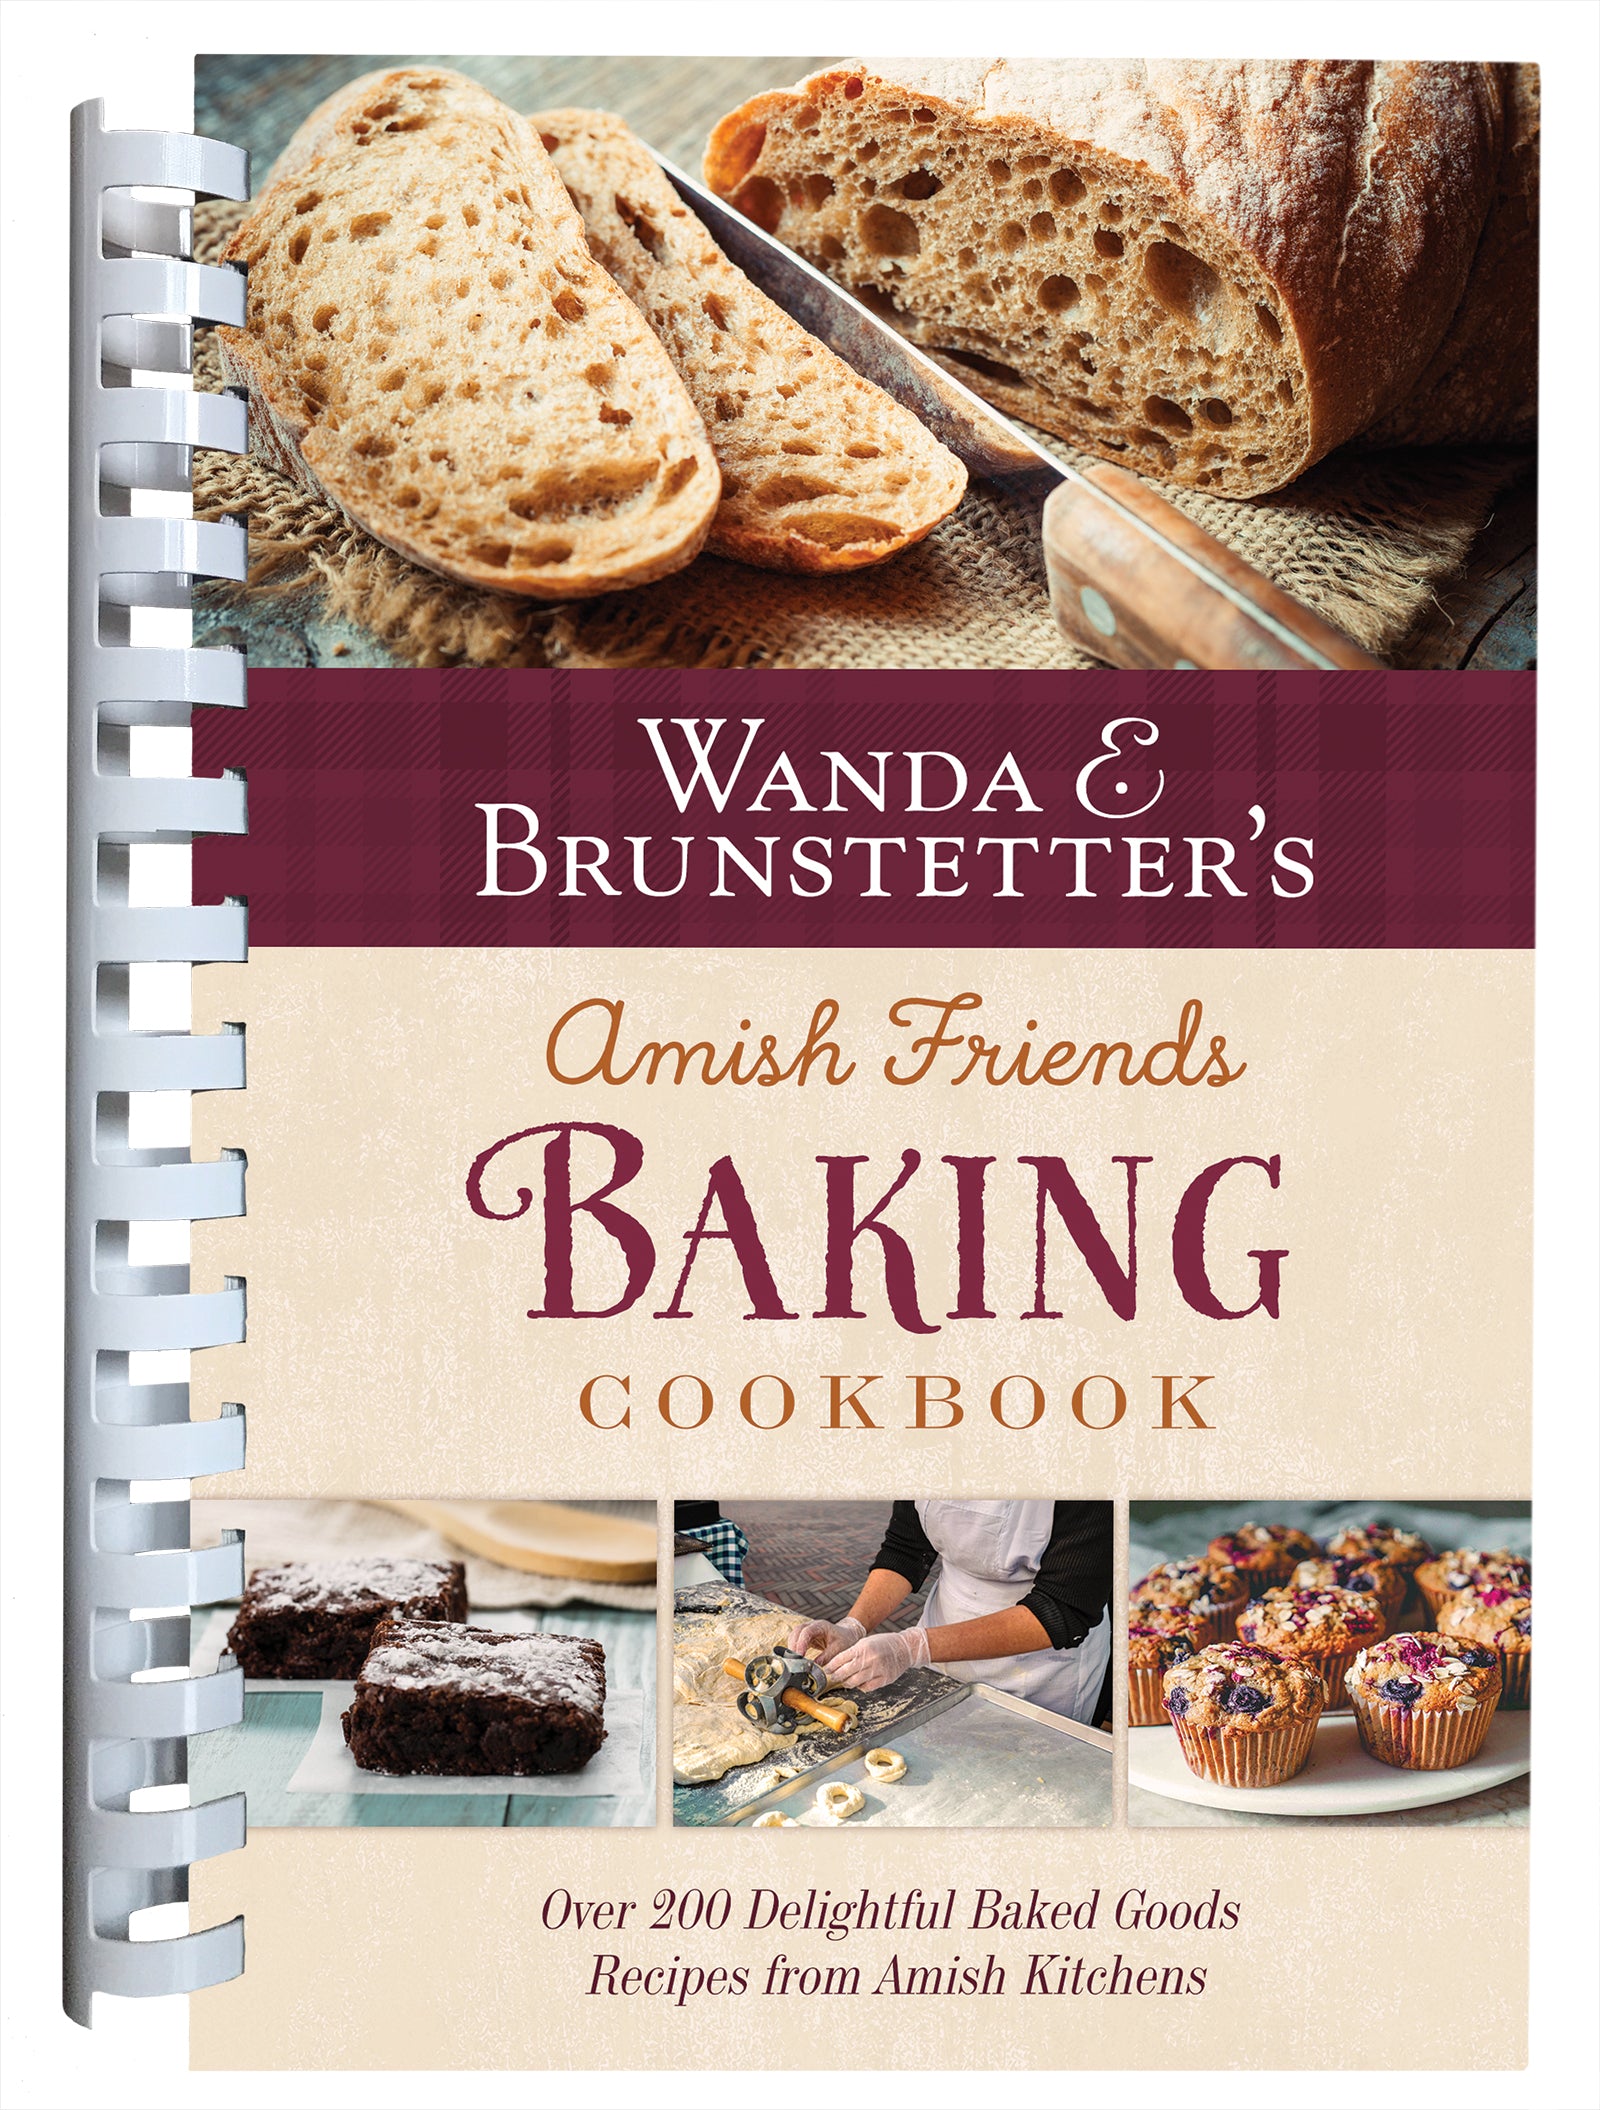 Wanda E. Brunstetter's Amish Friends Baking Cookbook - The Christian Gift Company